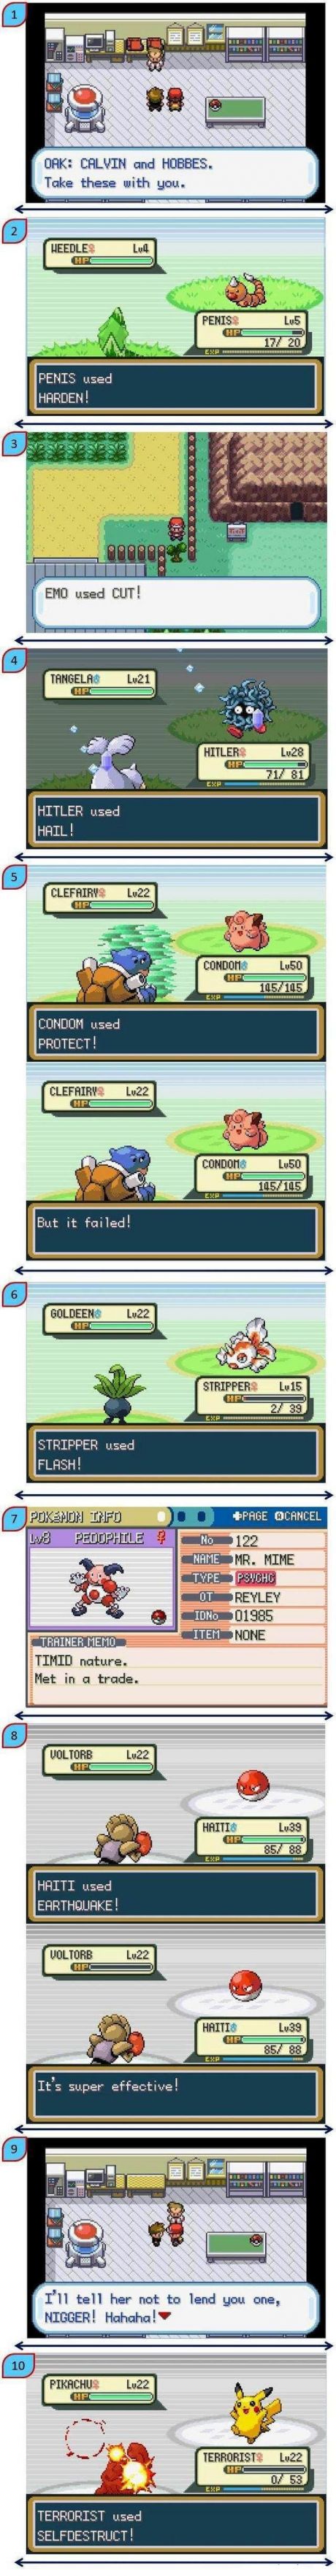 Pokemon fails